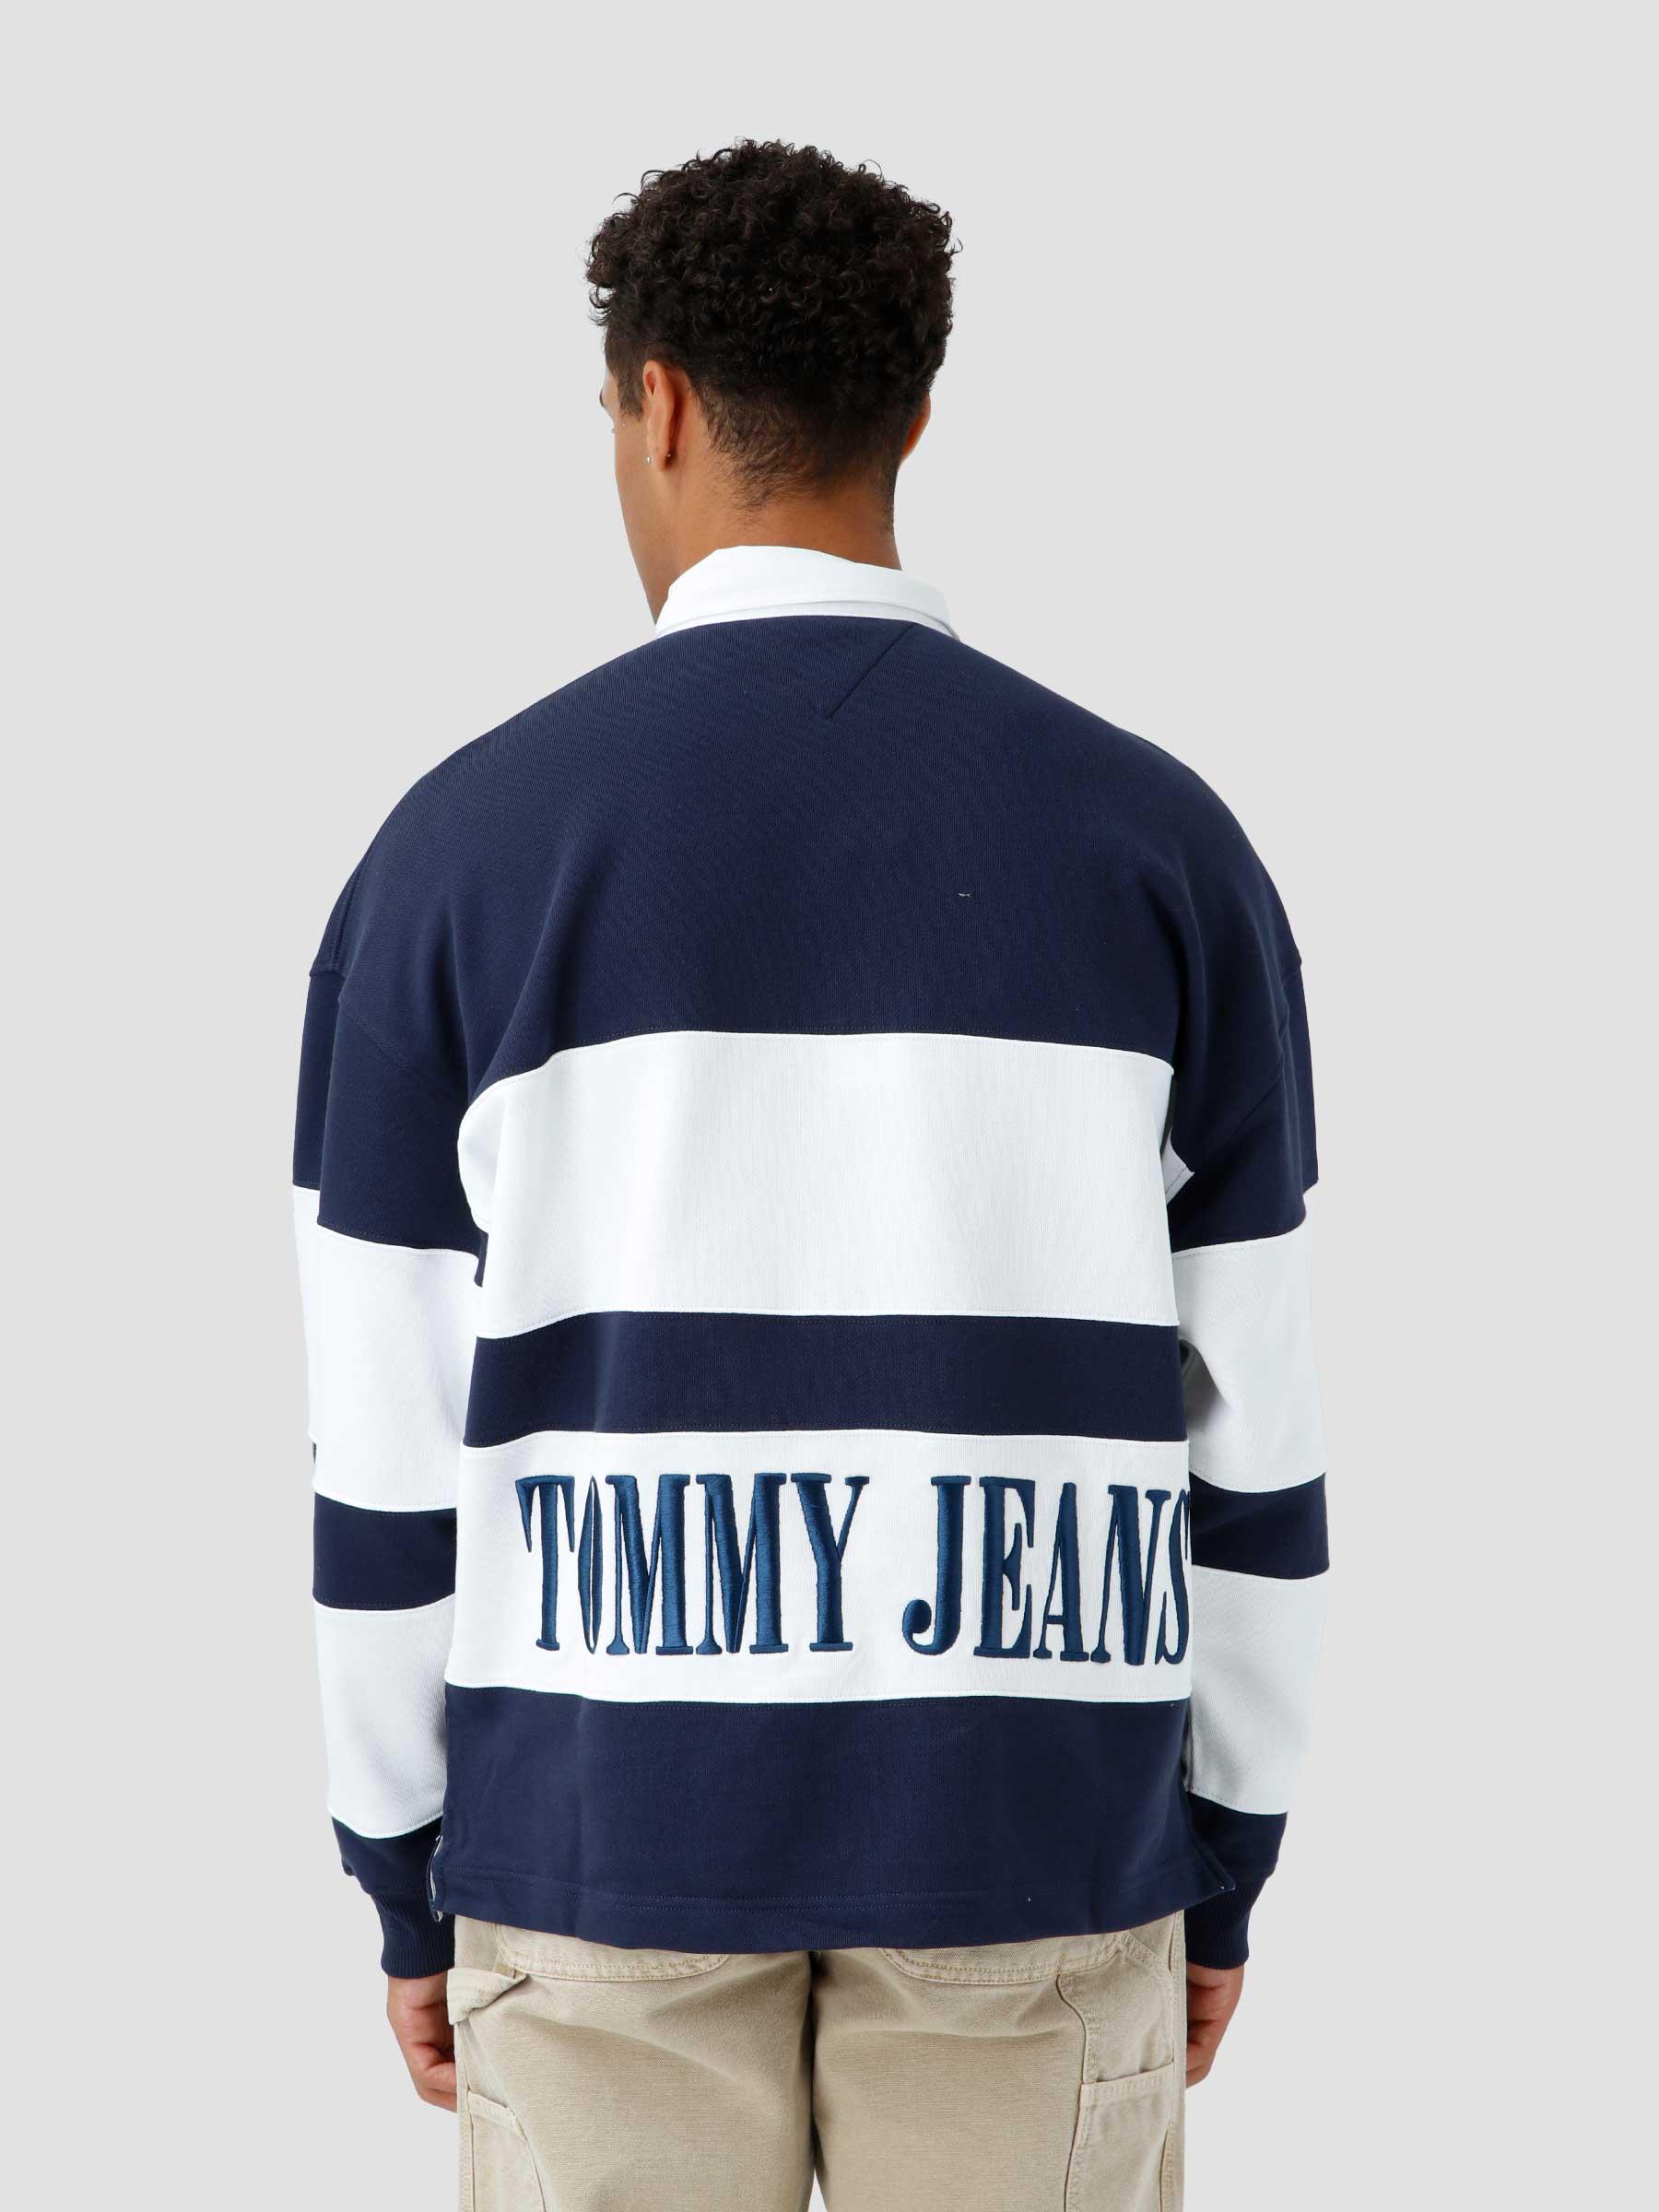 Rugby - Twilight Jeans Freshcotton Navy Archive Skater Block TJM Tommy